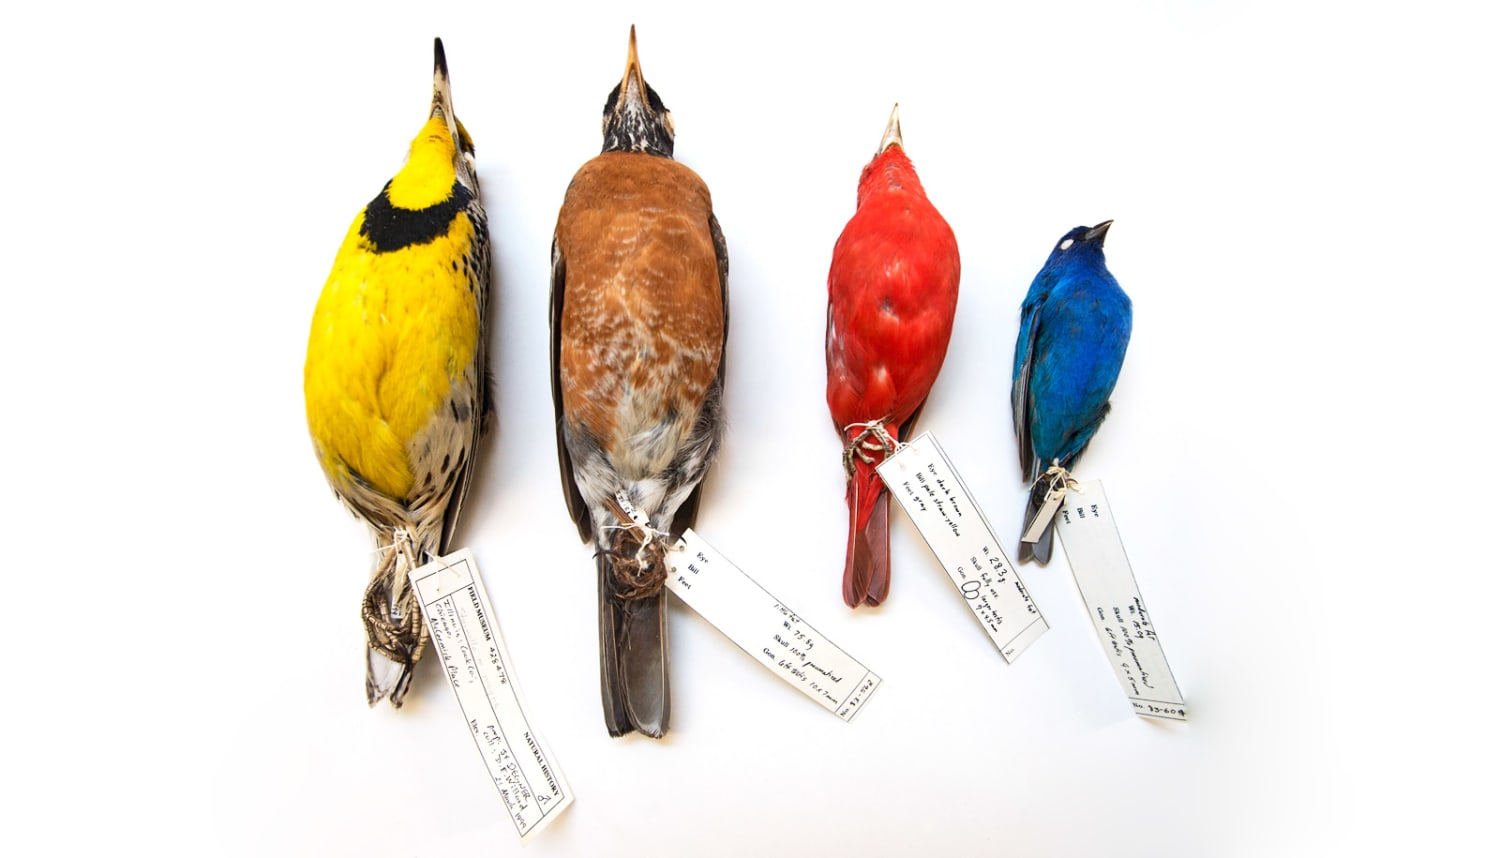 Migratory birds are shrinking as the world heats up